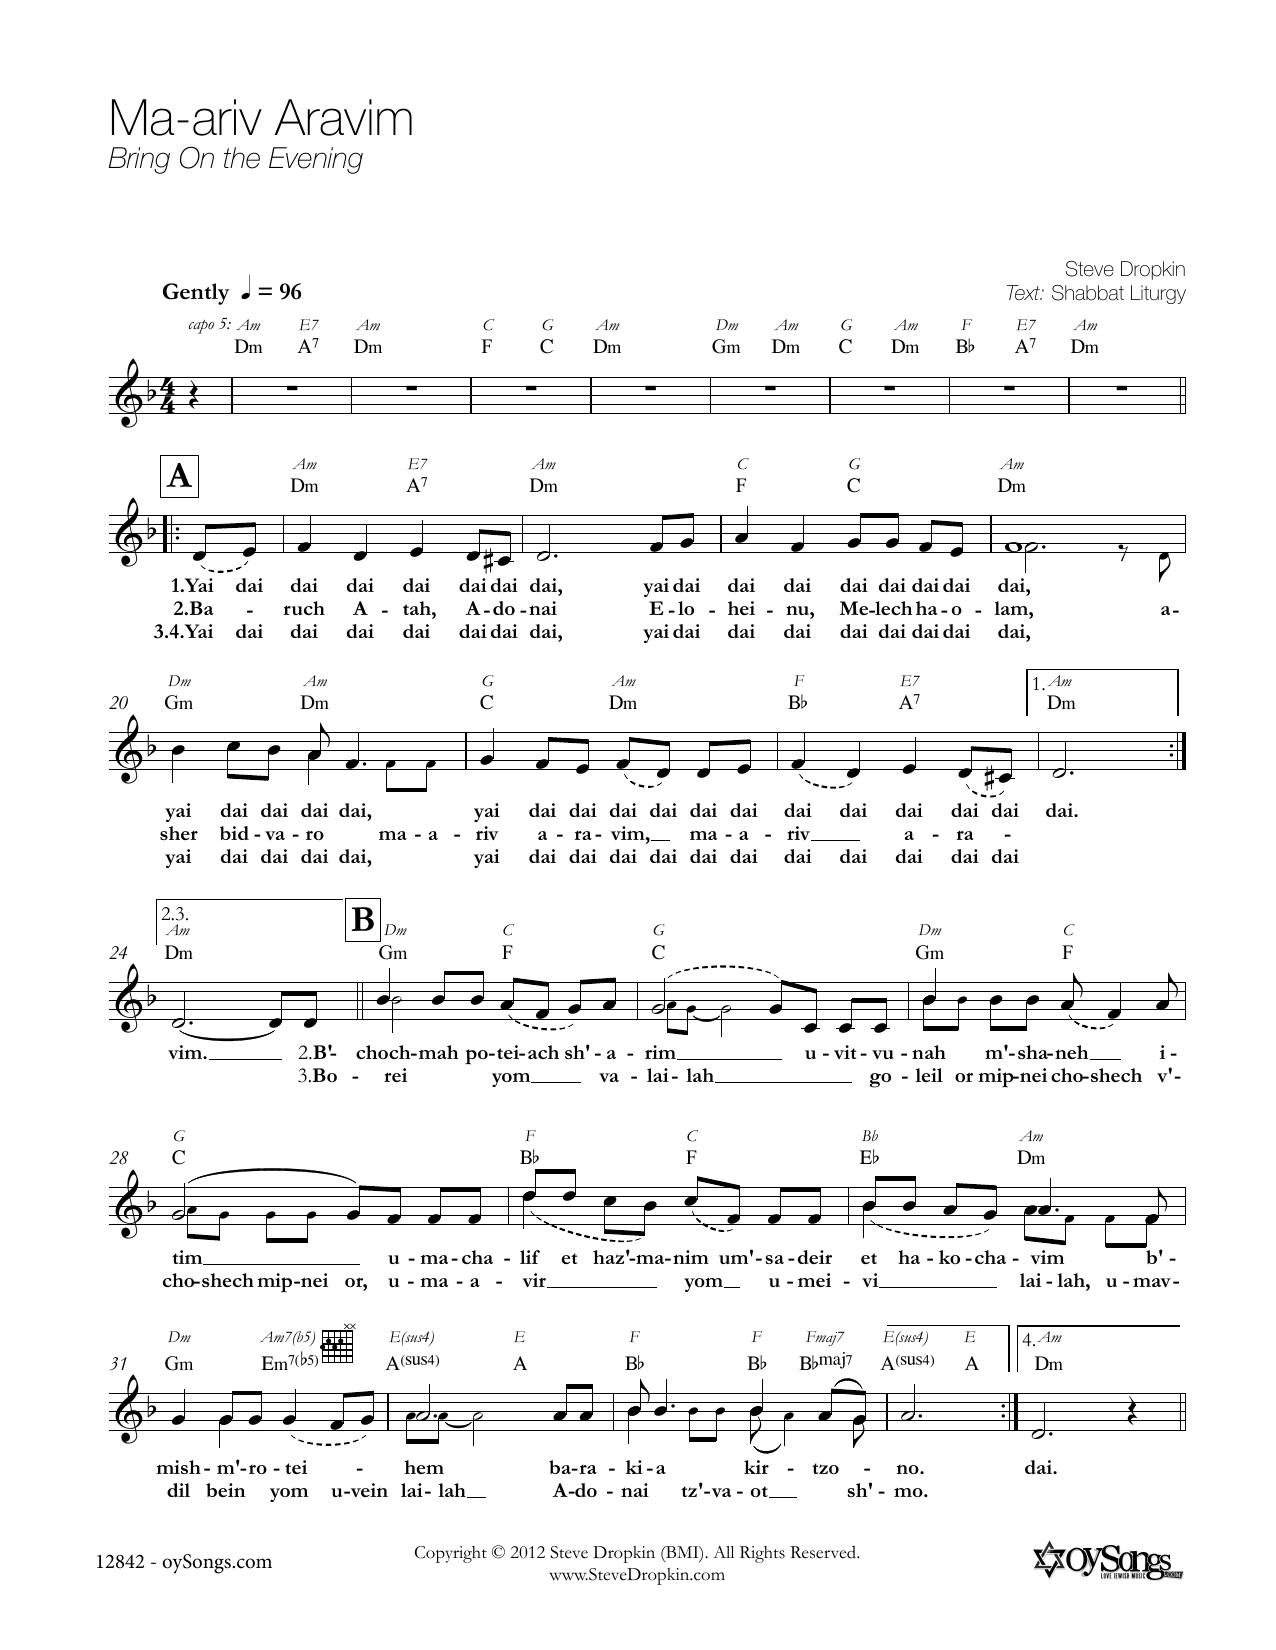 Download Steve Dropkin Ma-ariv Aravim Sheet Music and learn how to play Melody Line, Lyrics & Chords PDF digital score in minutes